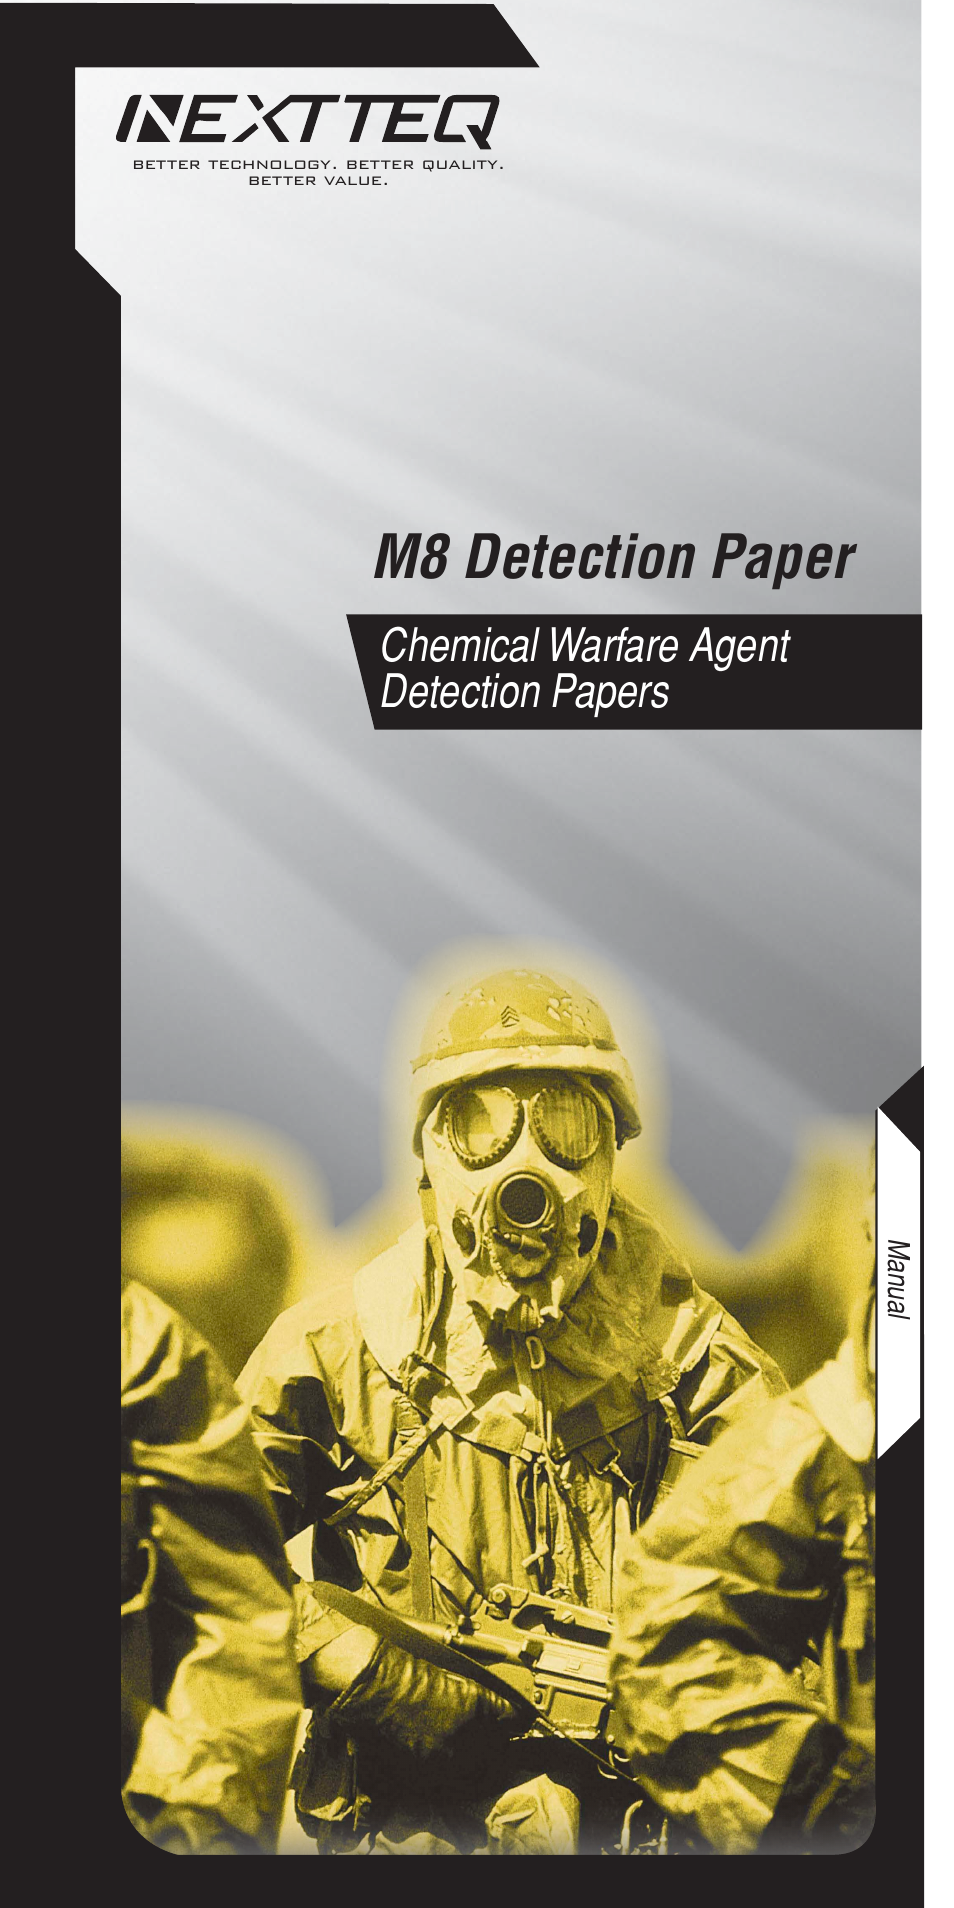 Nextteq M8 Detection Paper User Manual | 20 pages